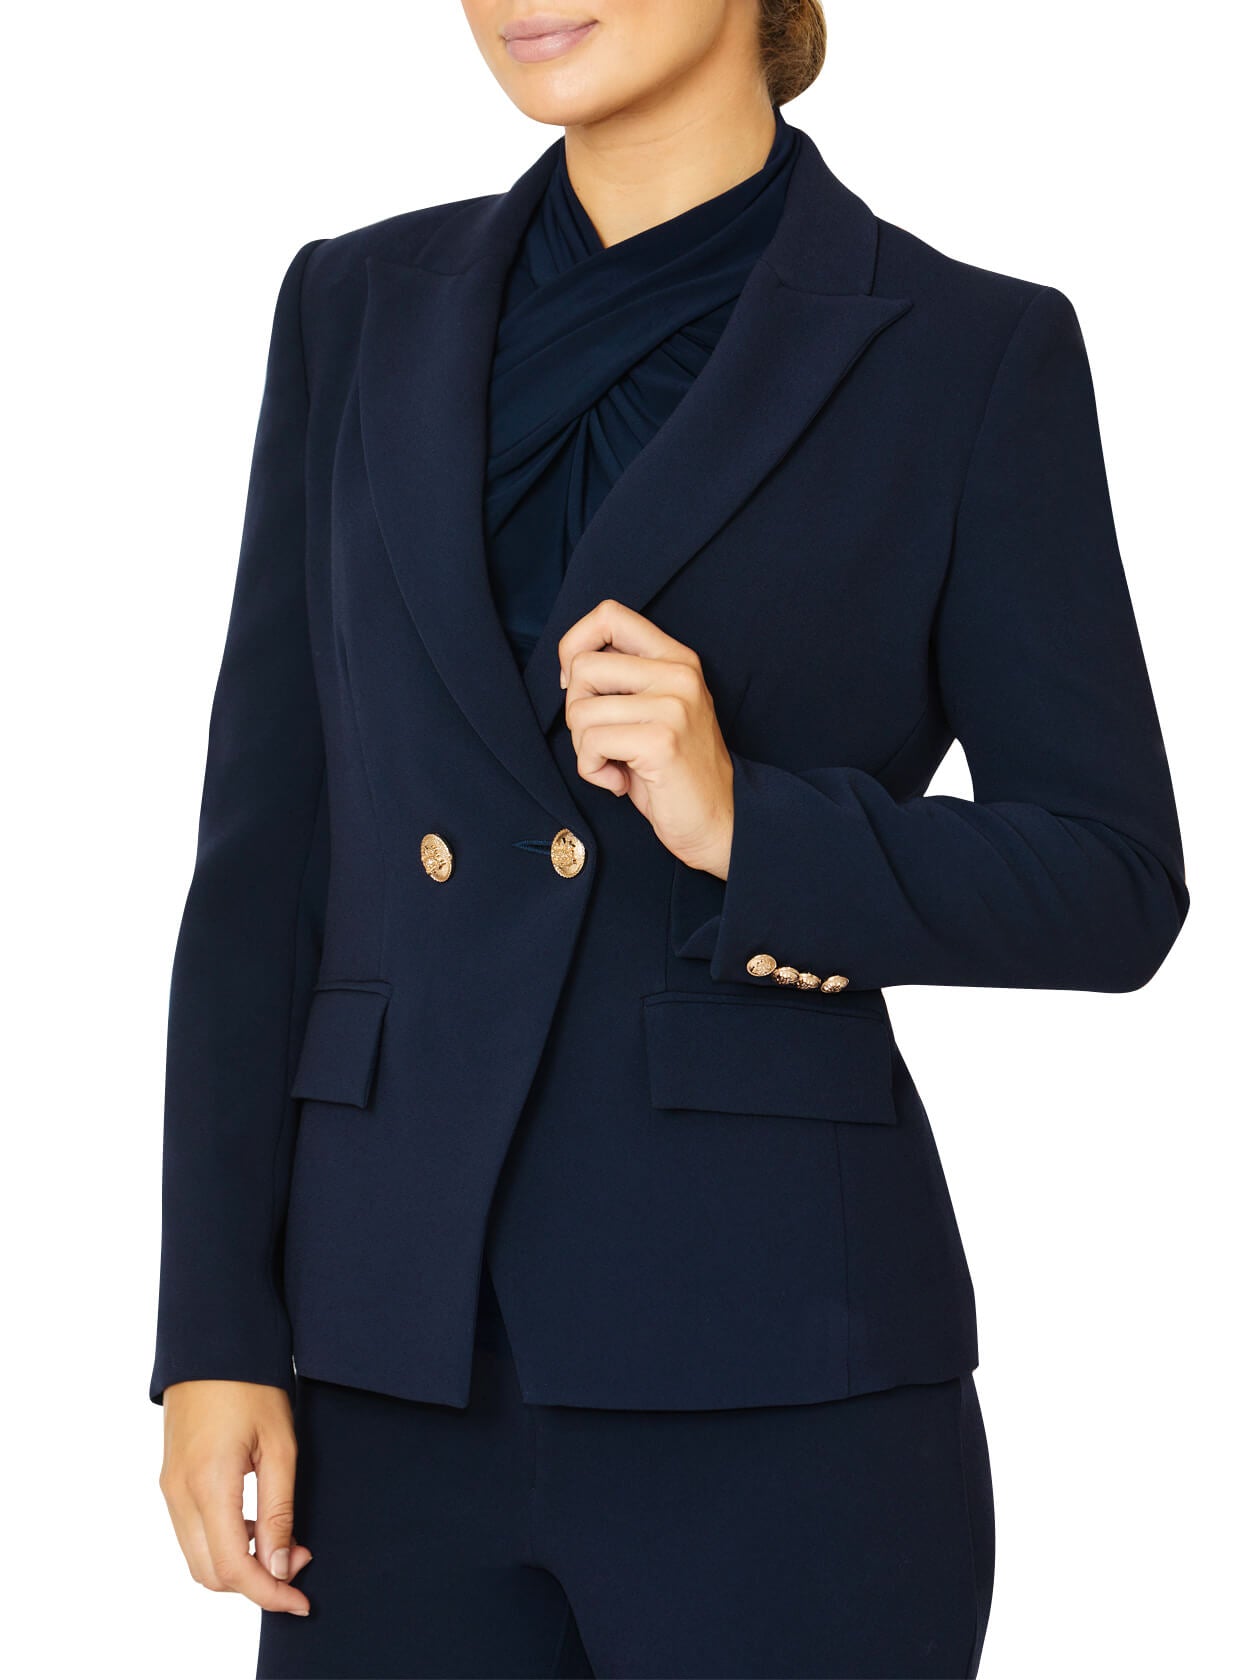 Vanessa Navy Blue Double-Breasted Jacket